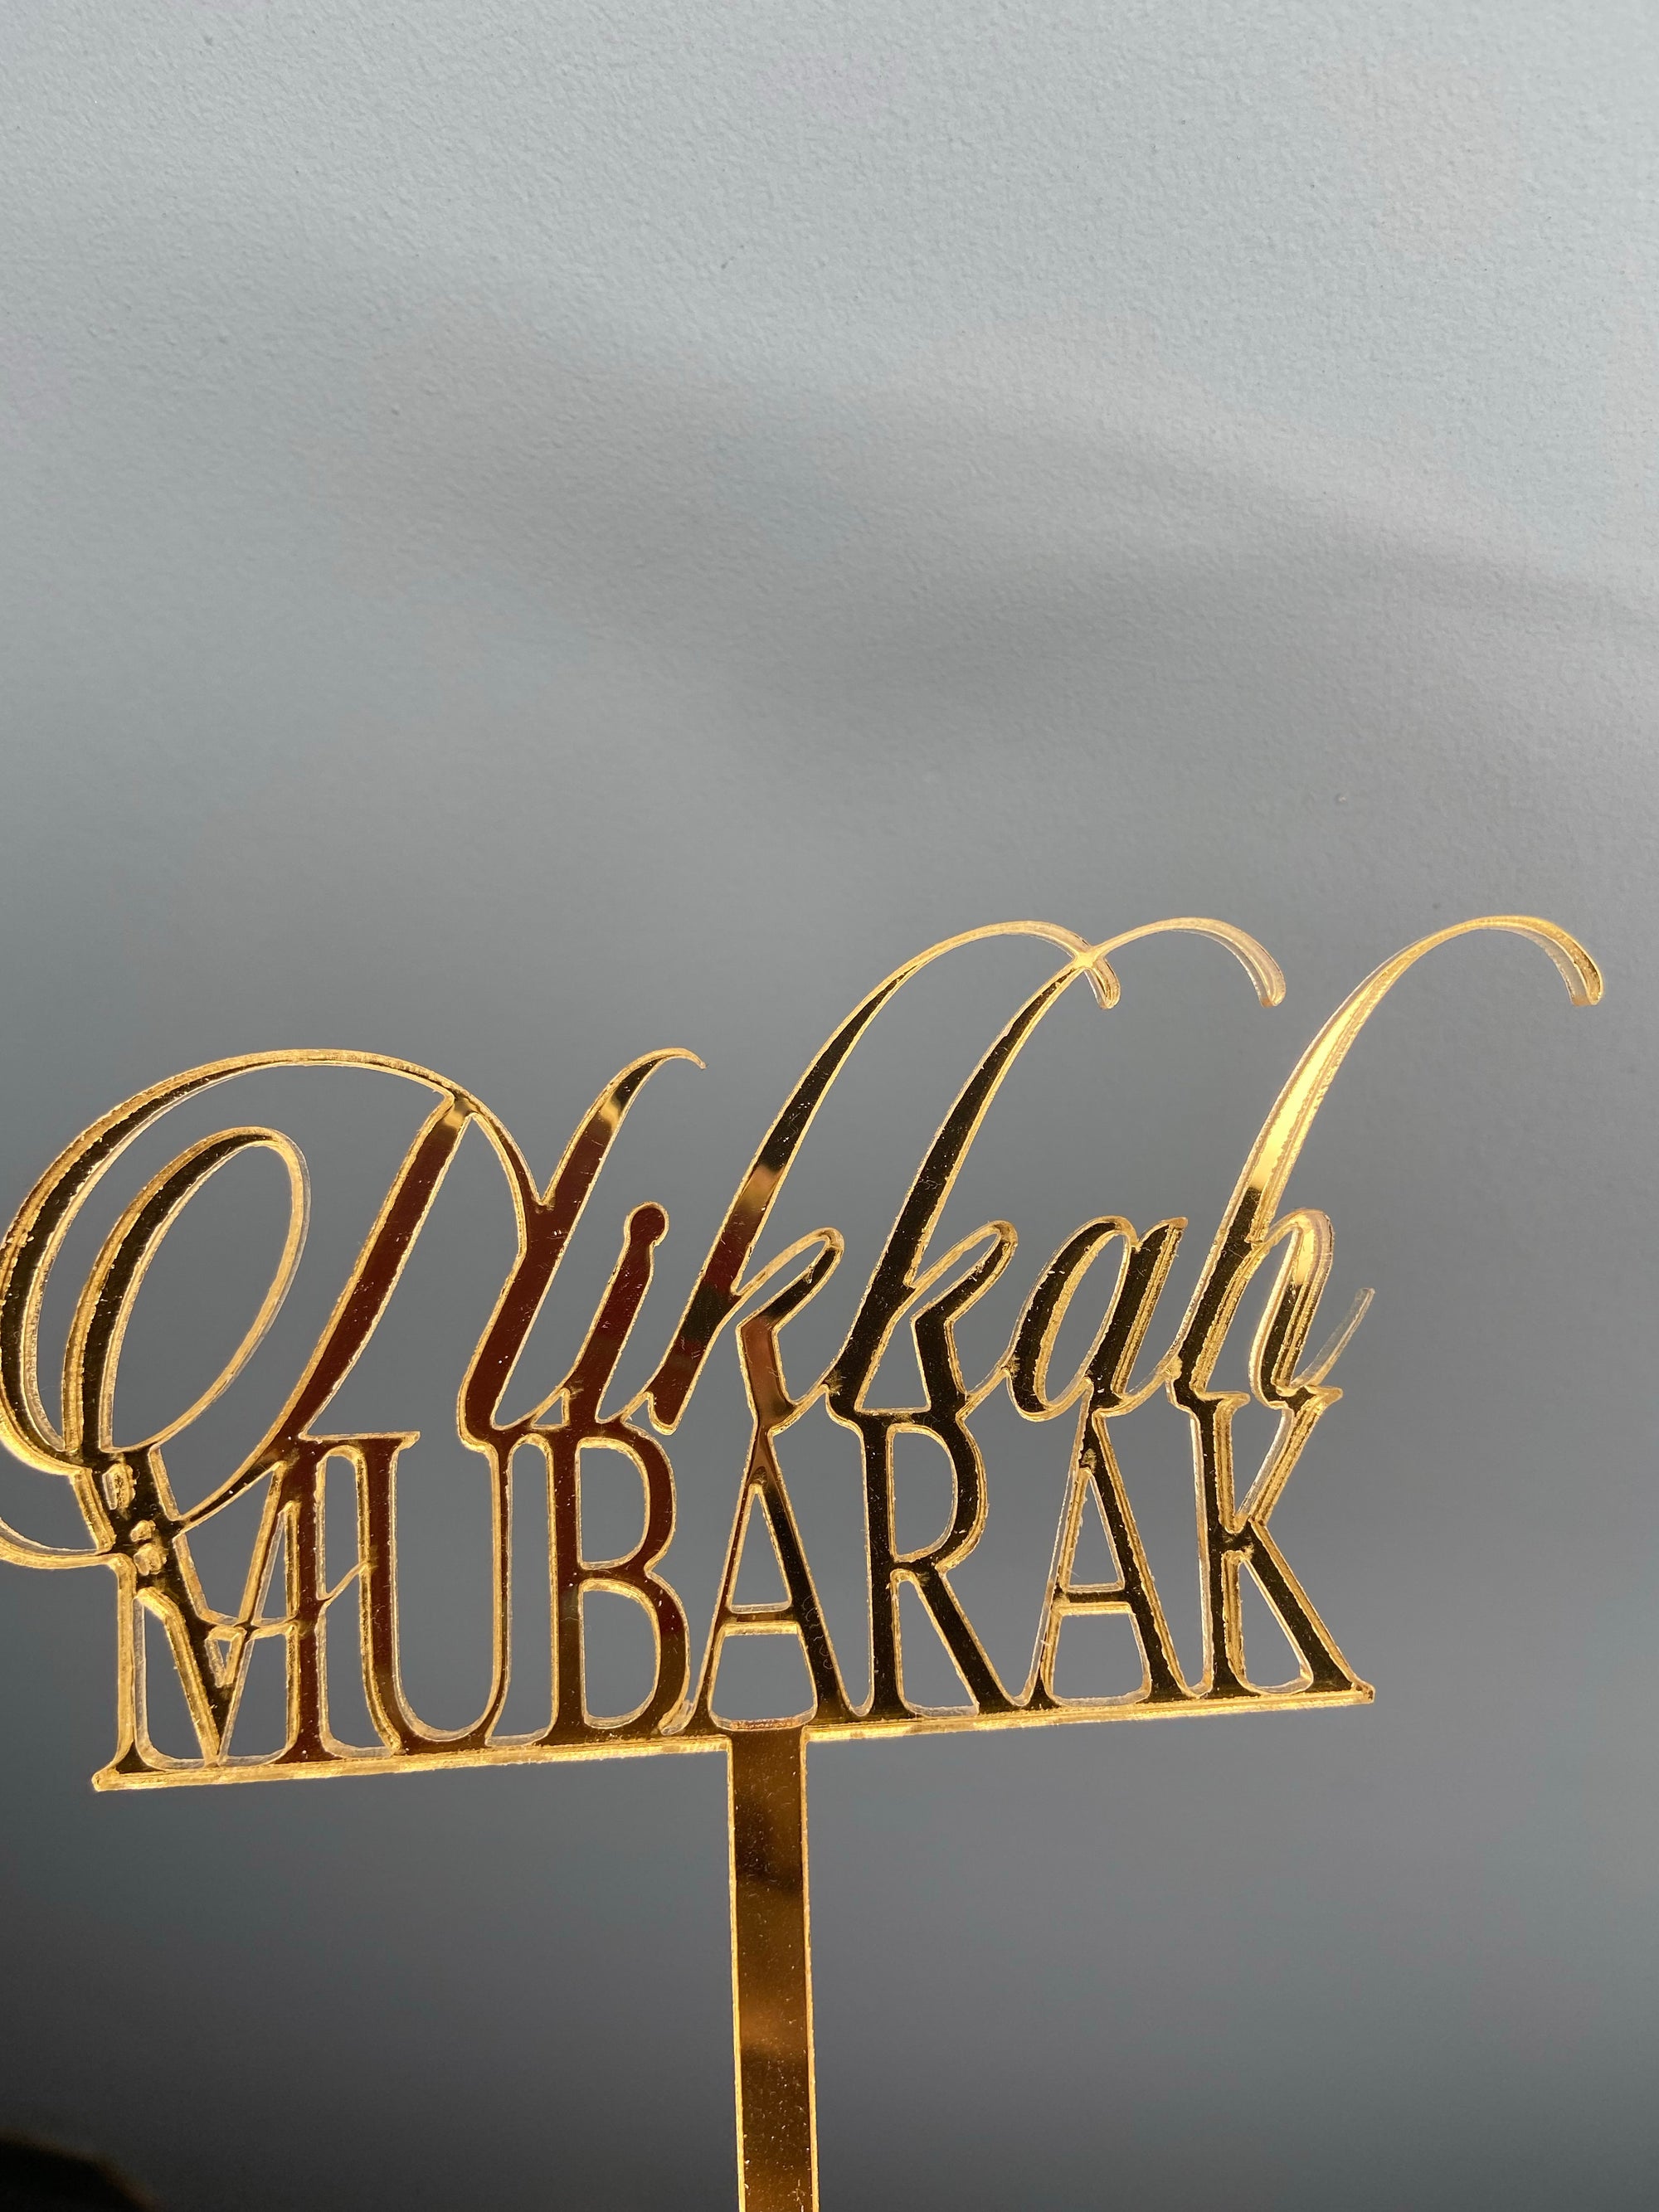 Sold as seen: Nikkah Mubarak